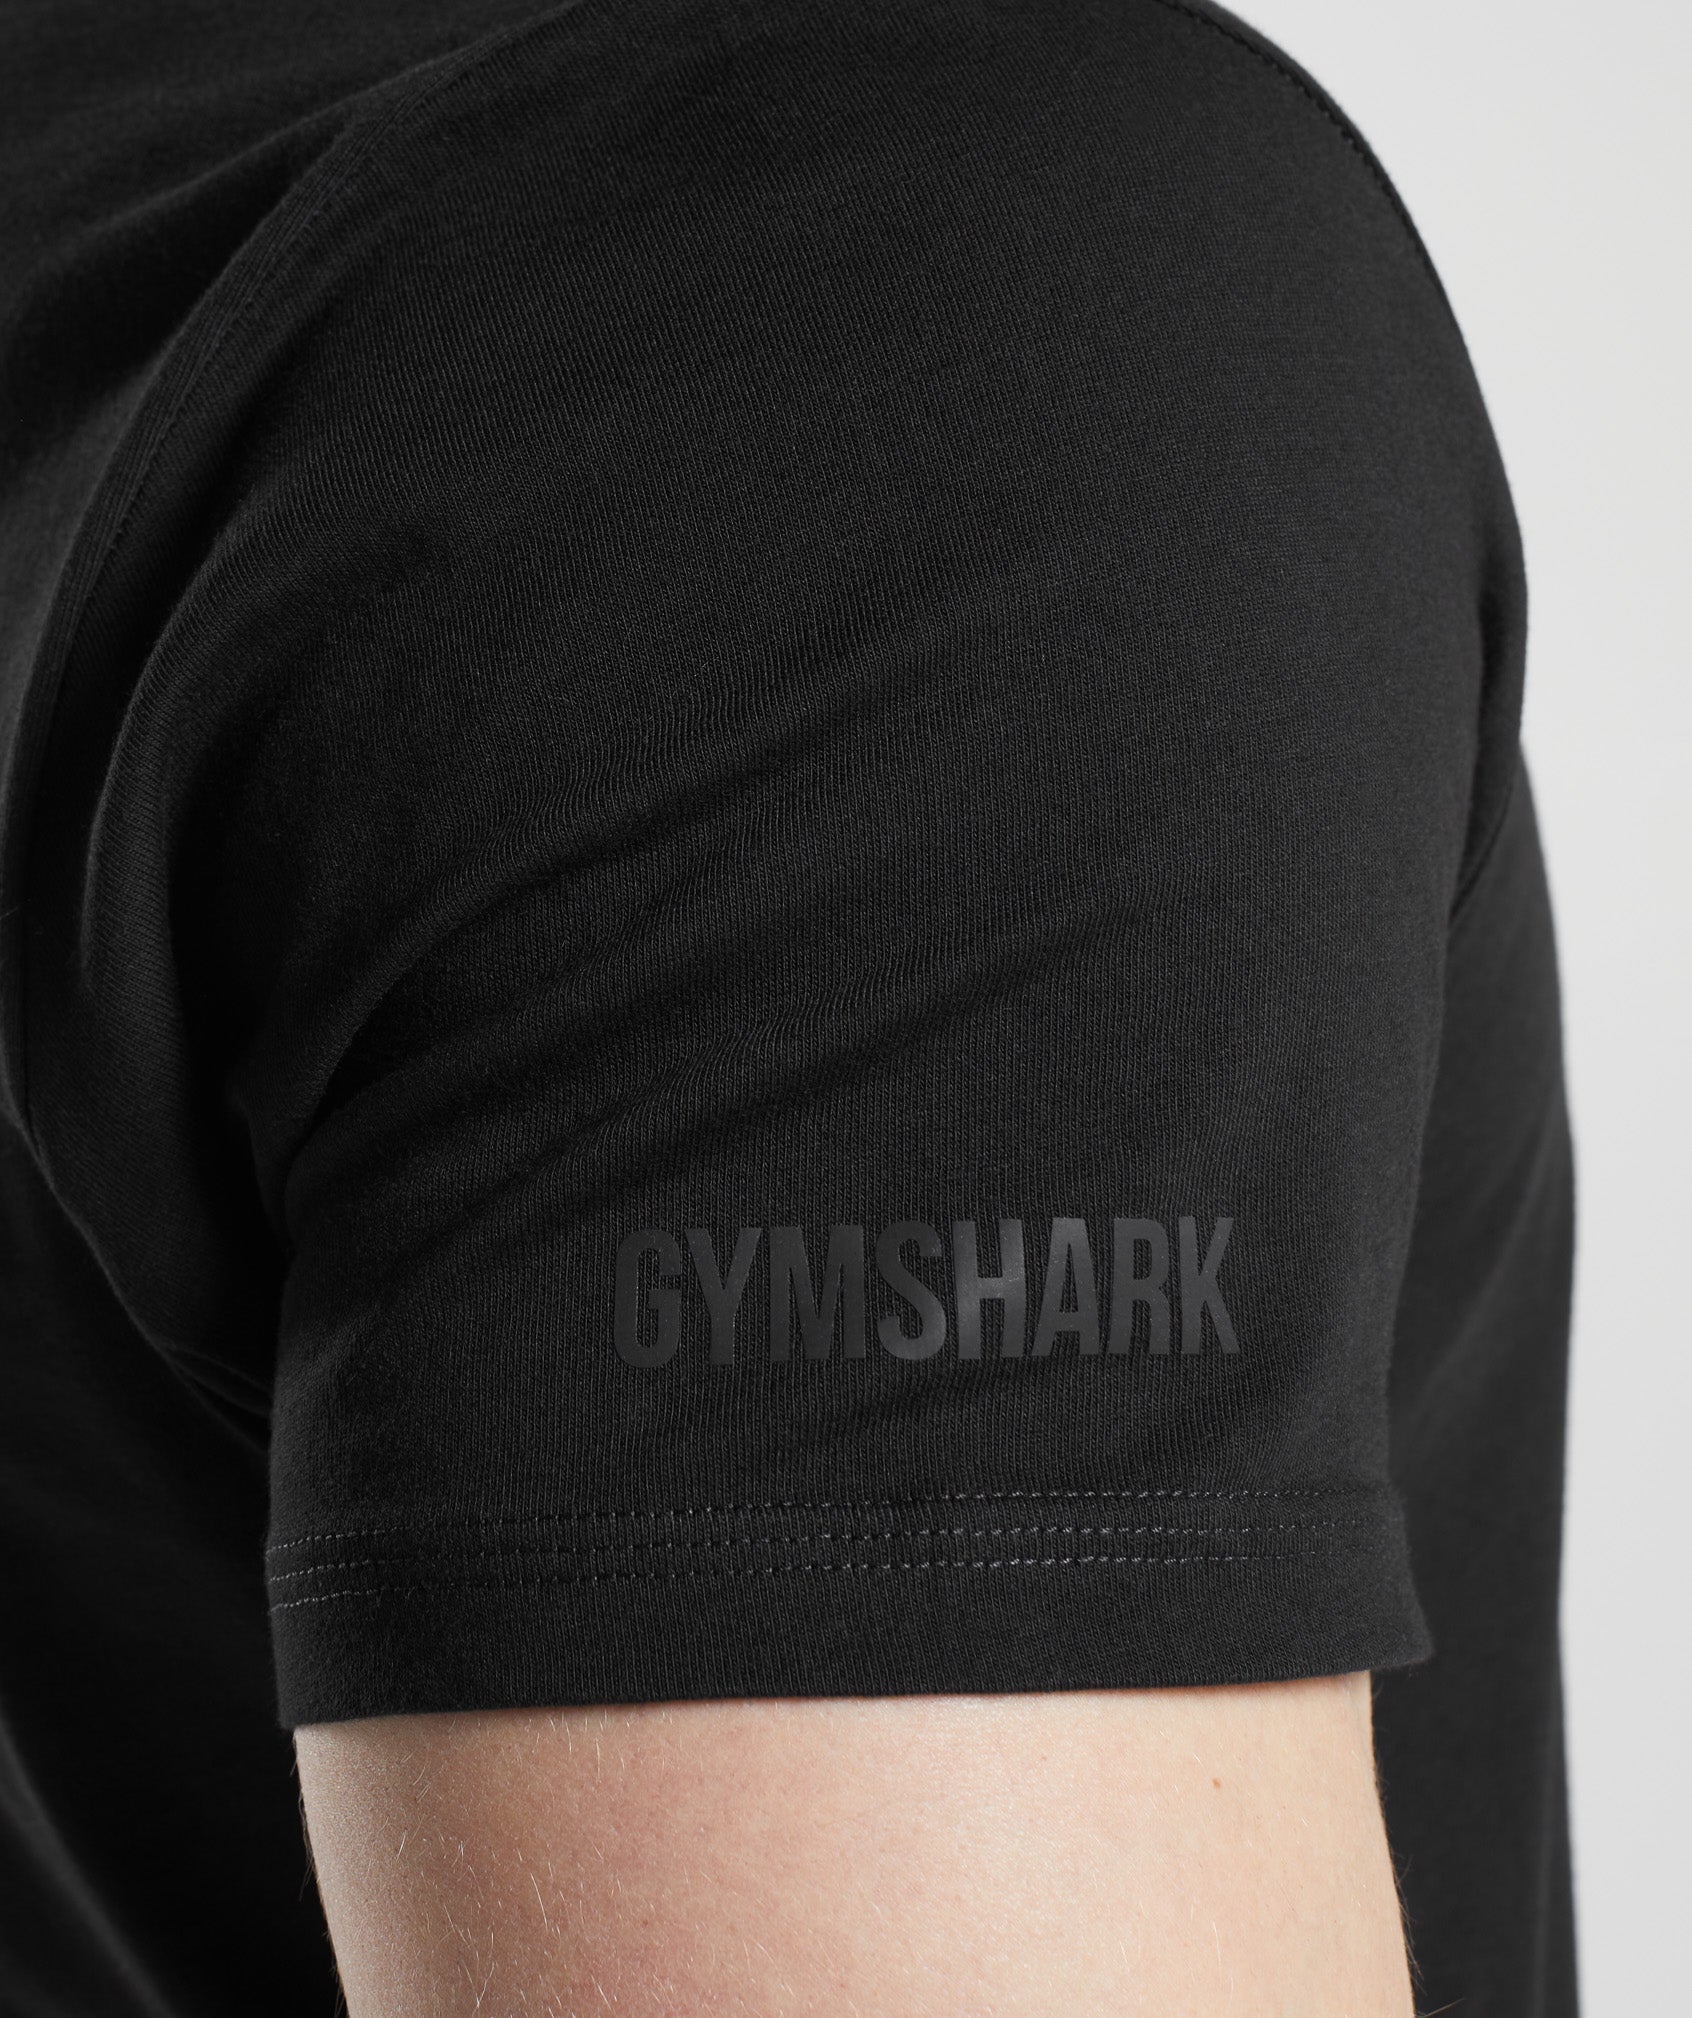 Gymshark GS x David Laid T-Shirt - Black